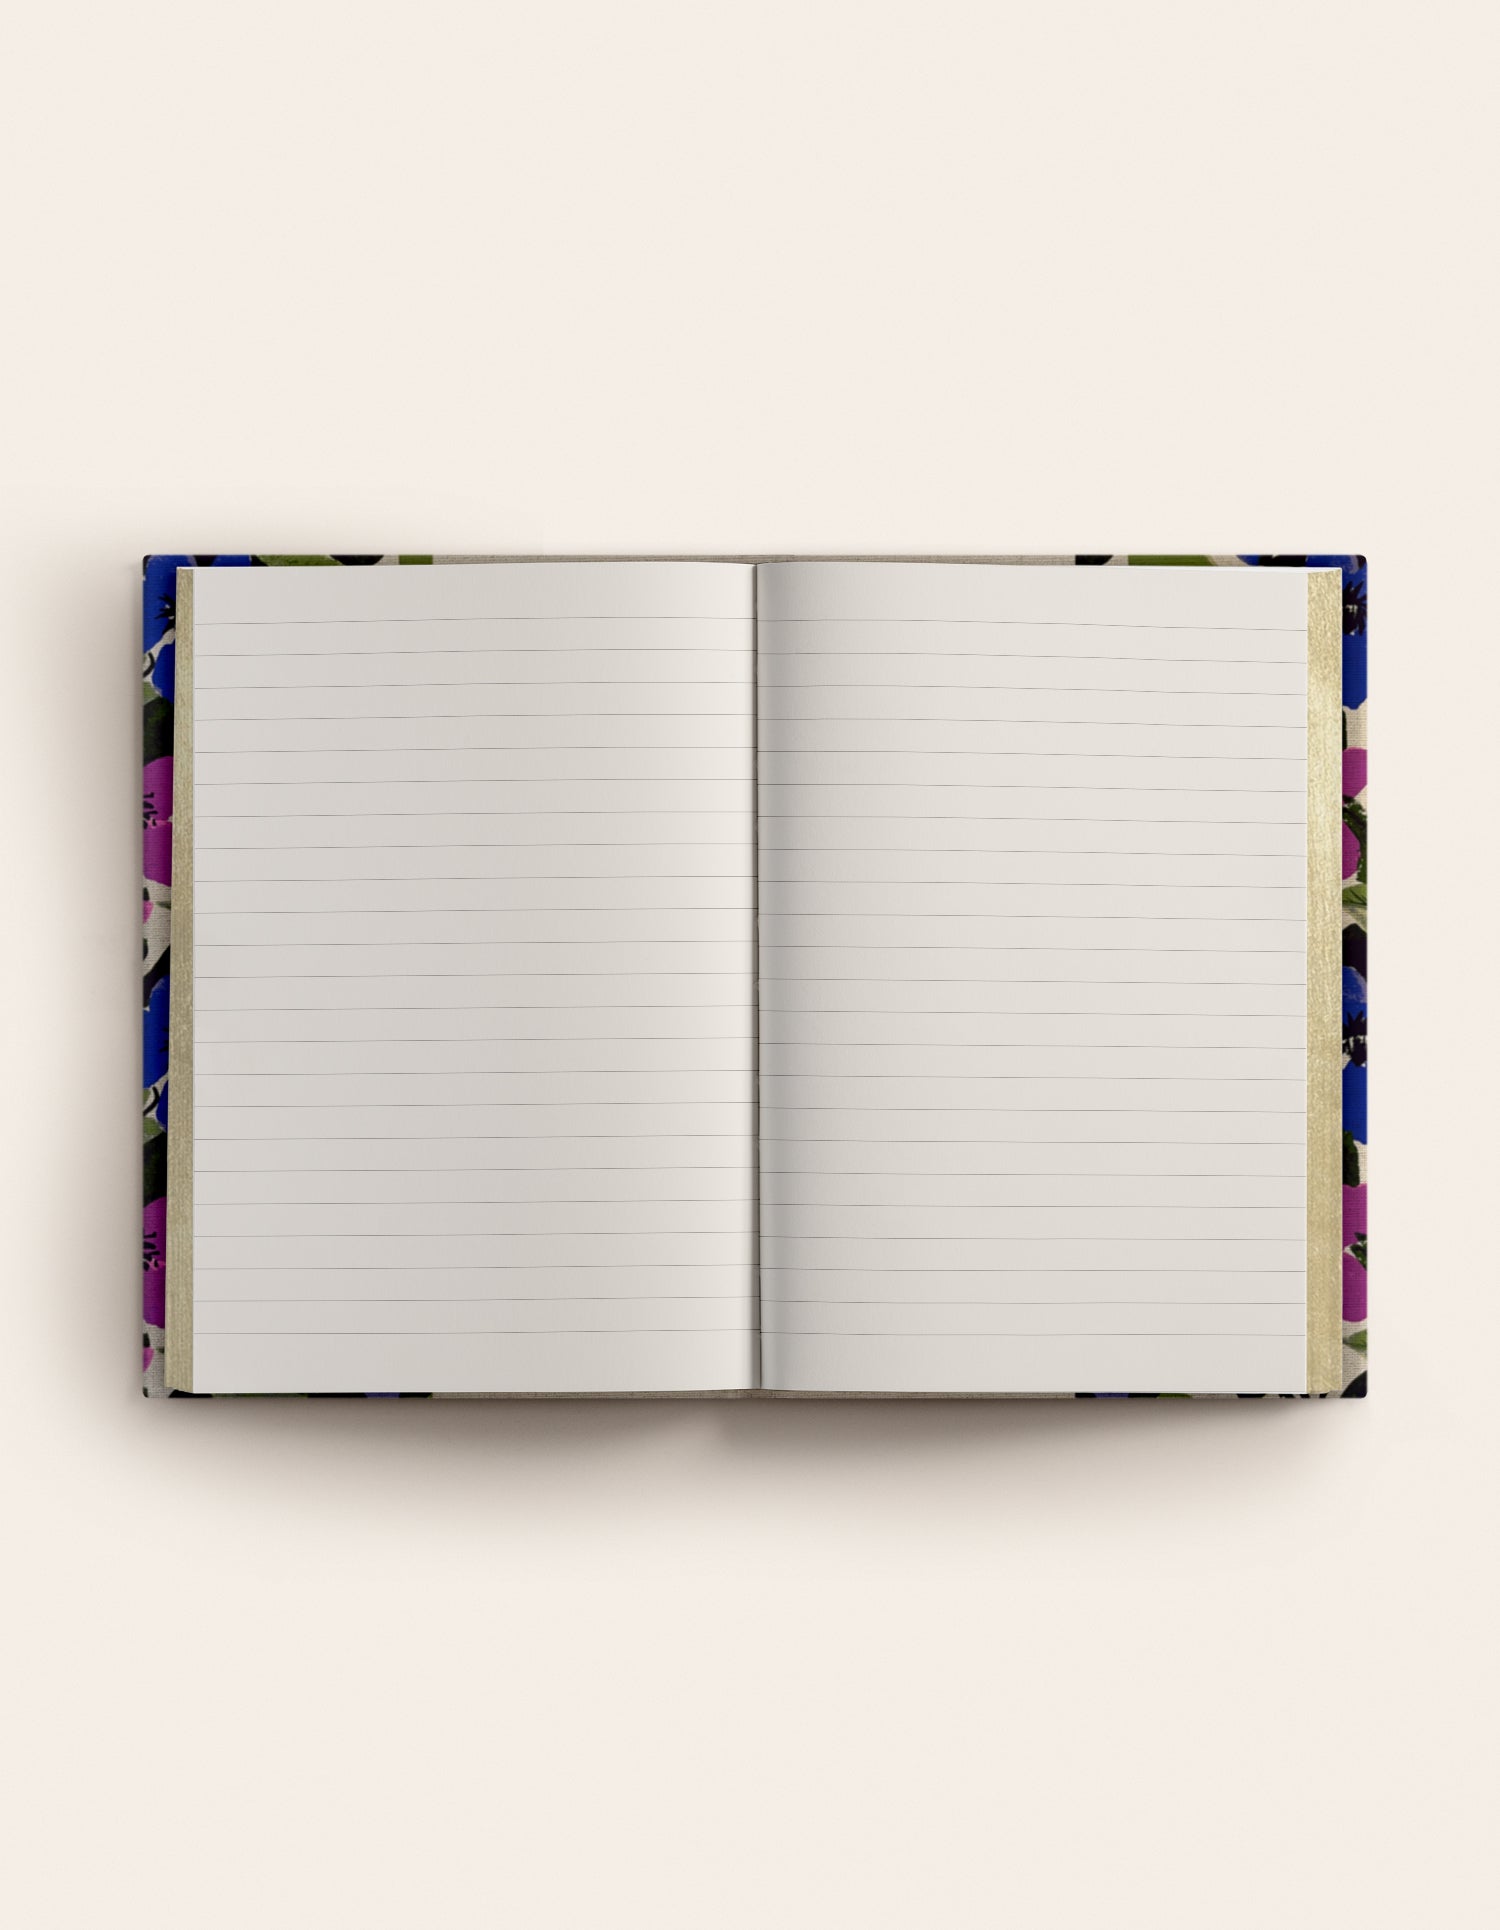 Field secrets notebook